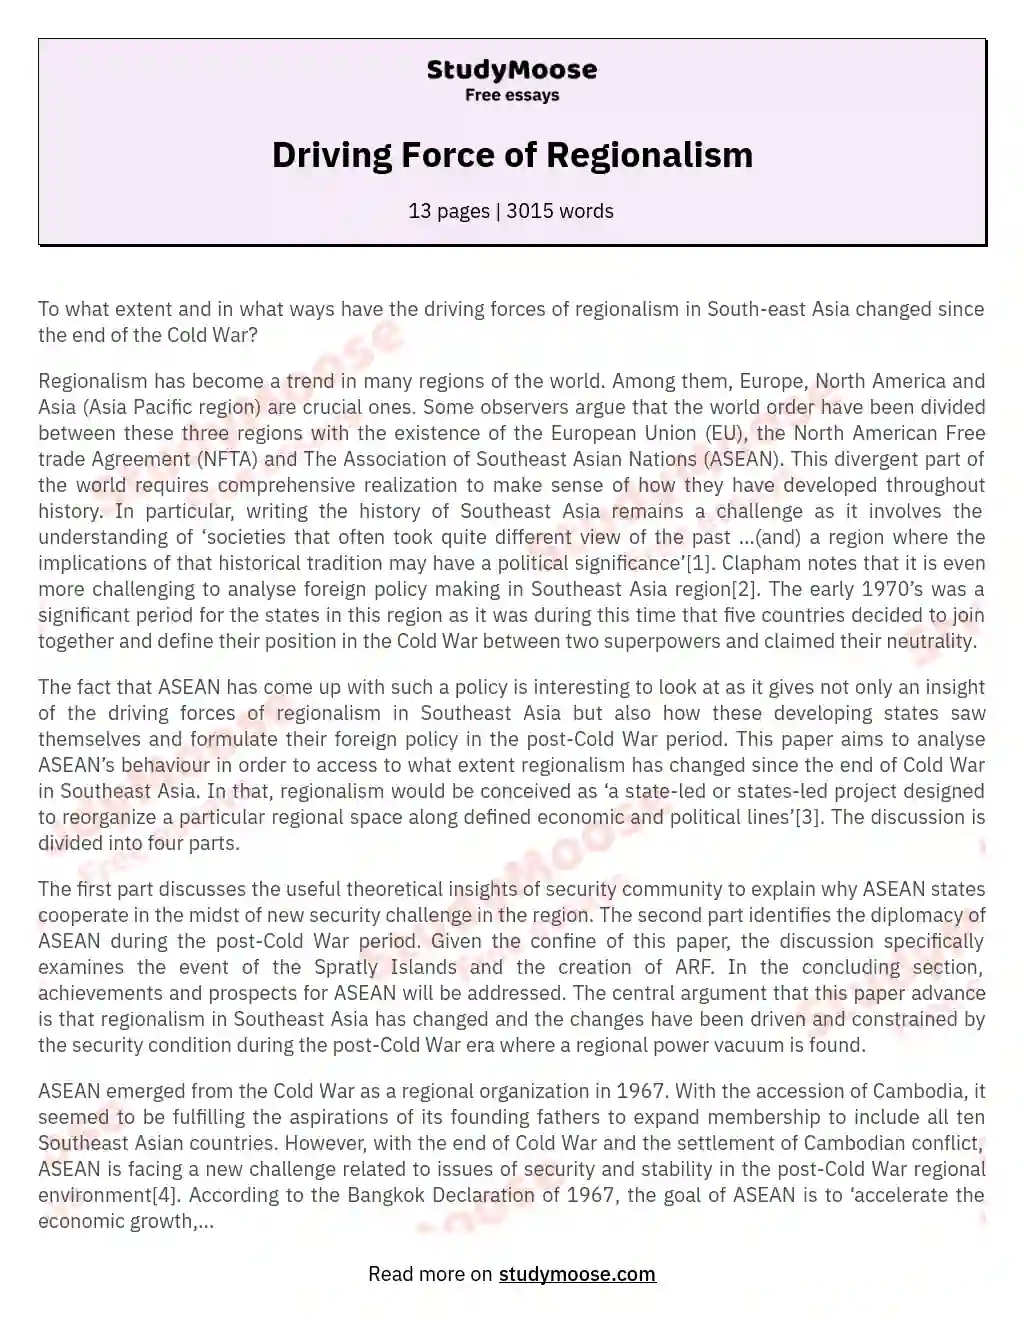 Driving Force of Regionalism essay